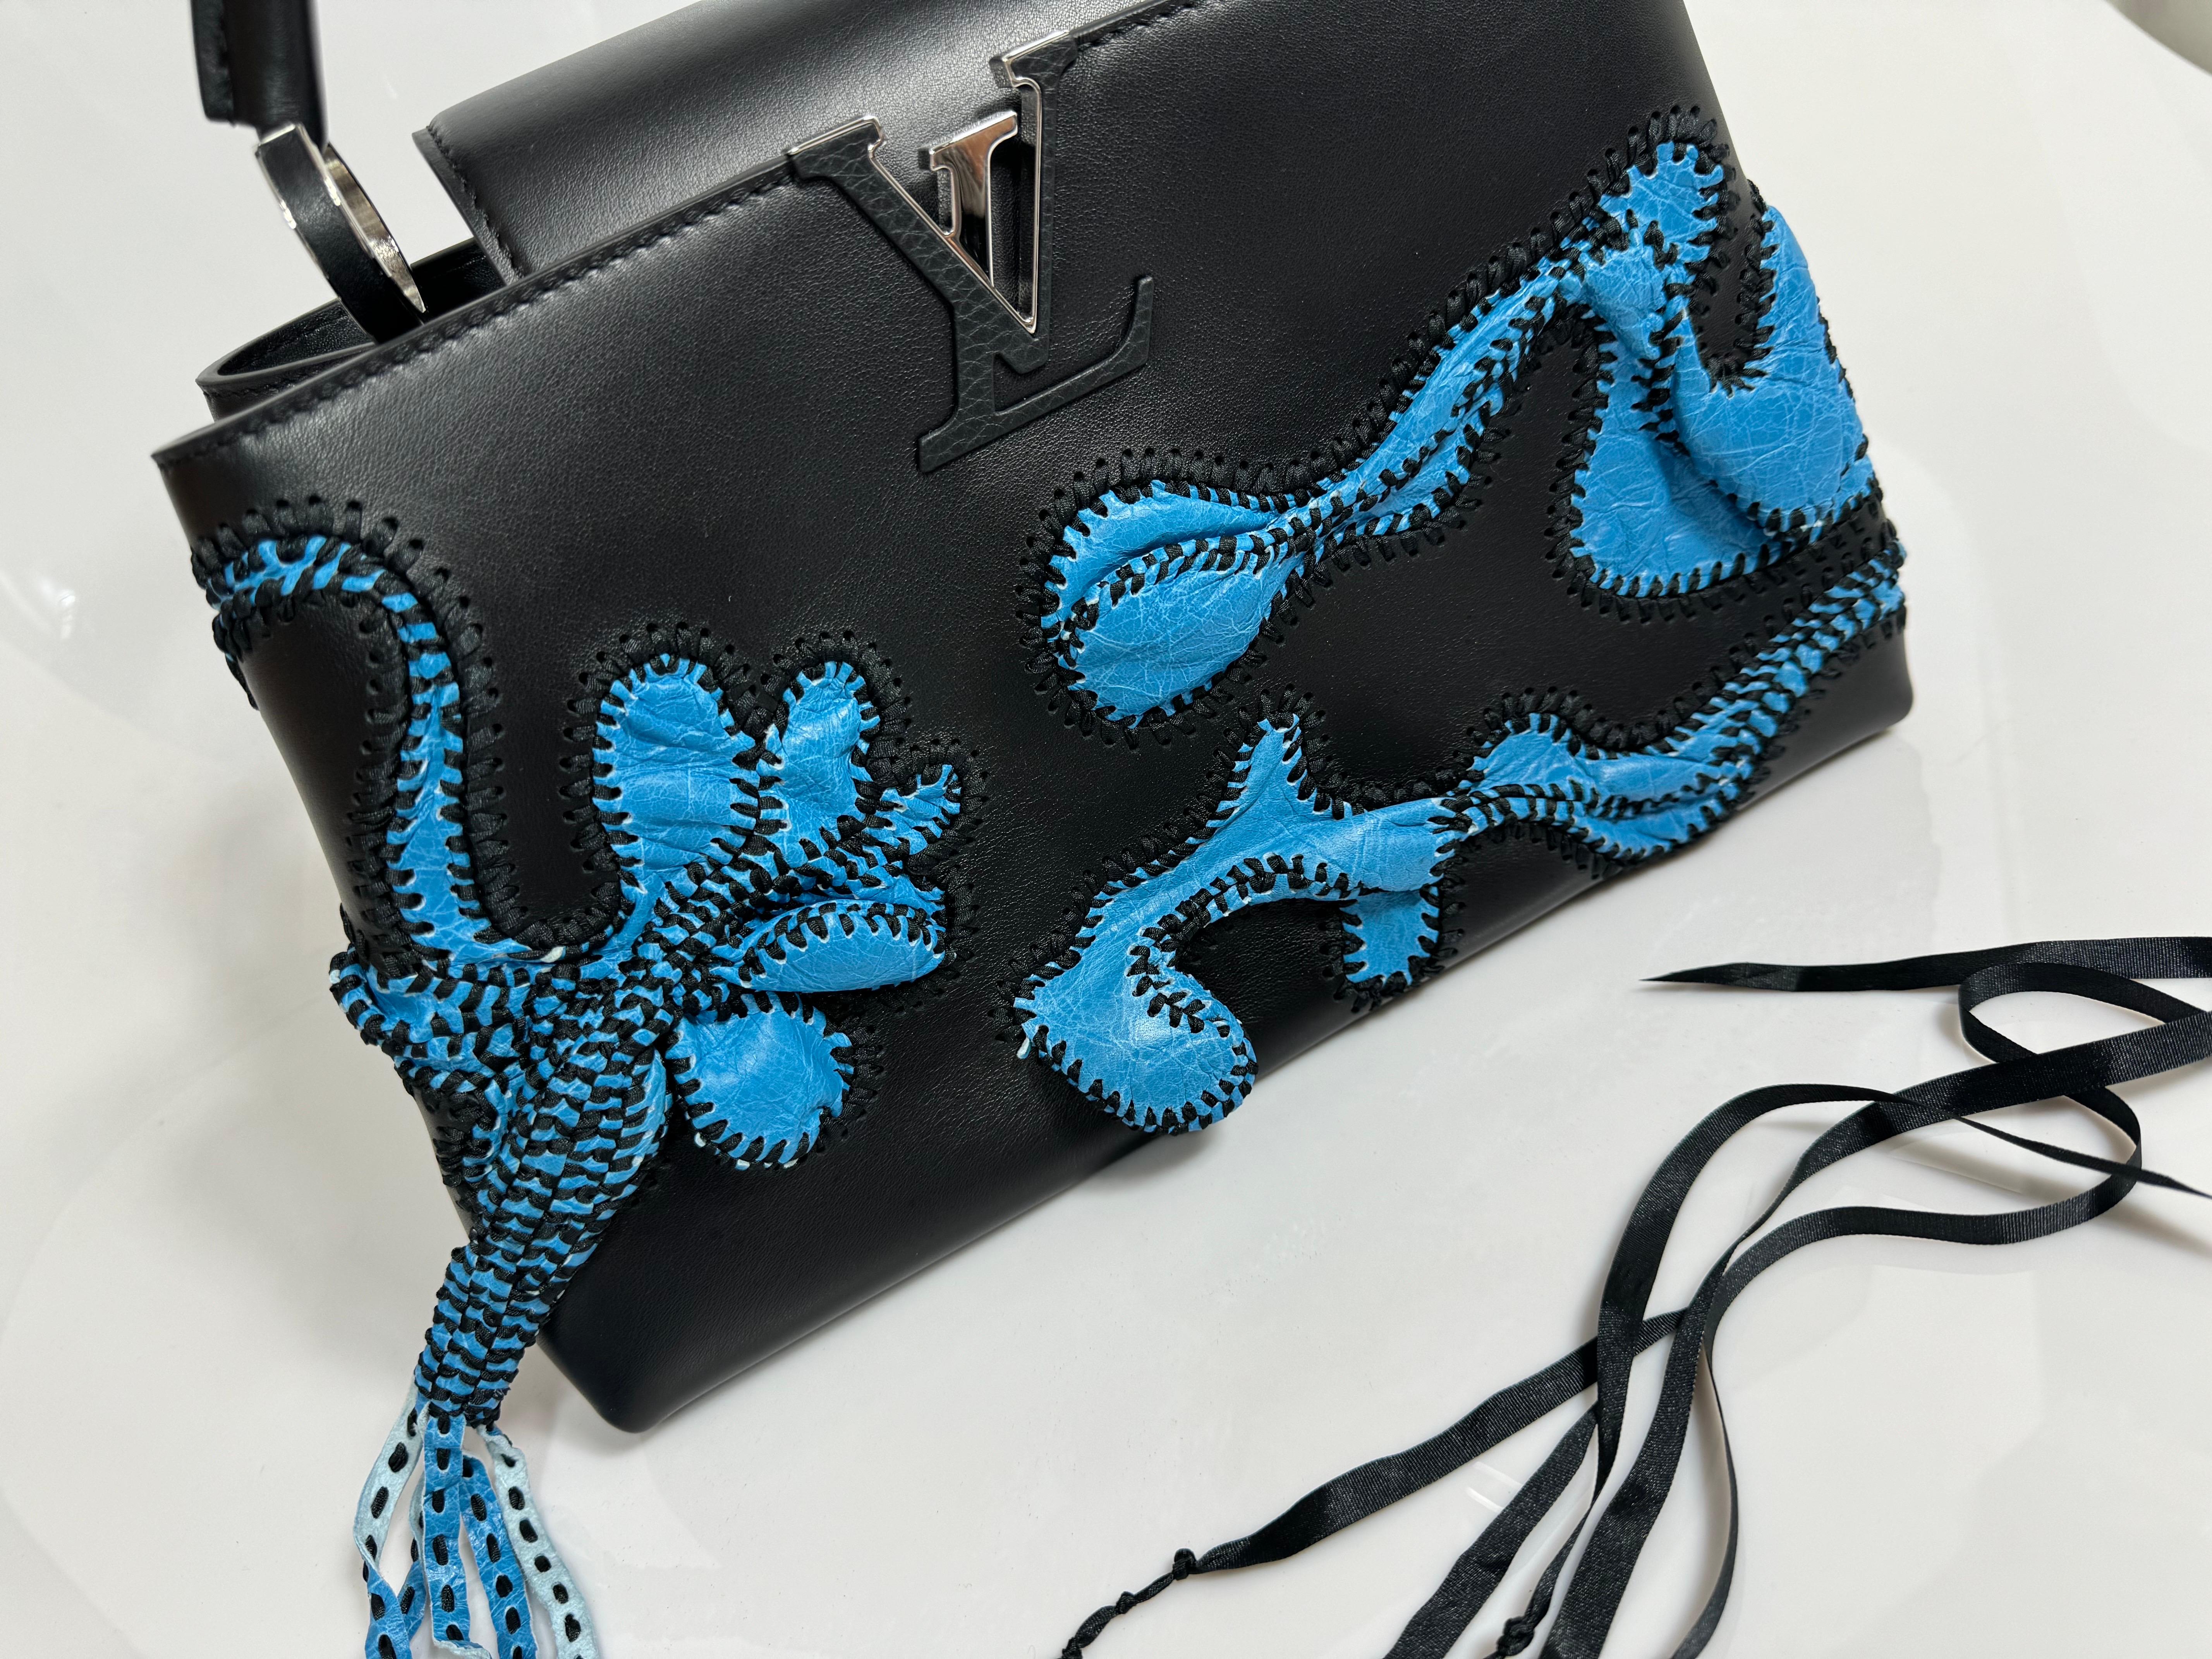 Louis Vuitton Limited Edition Nicholas Hlobo's Artycapucines Handbag-NEW IN BOX For Sale 2